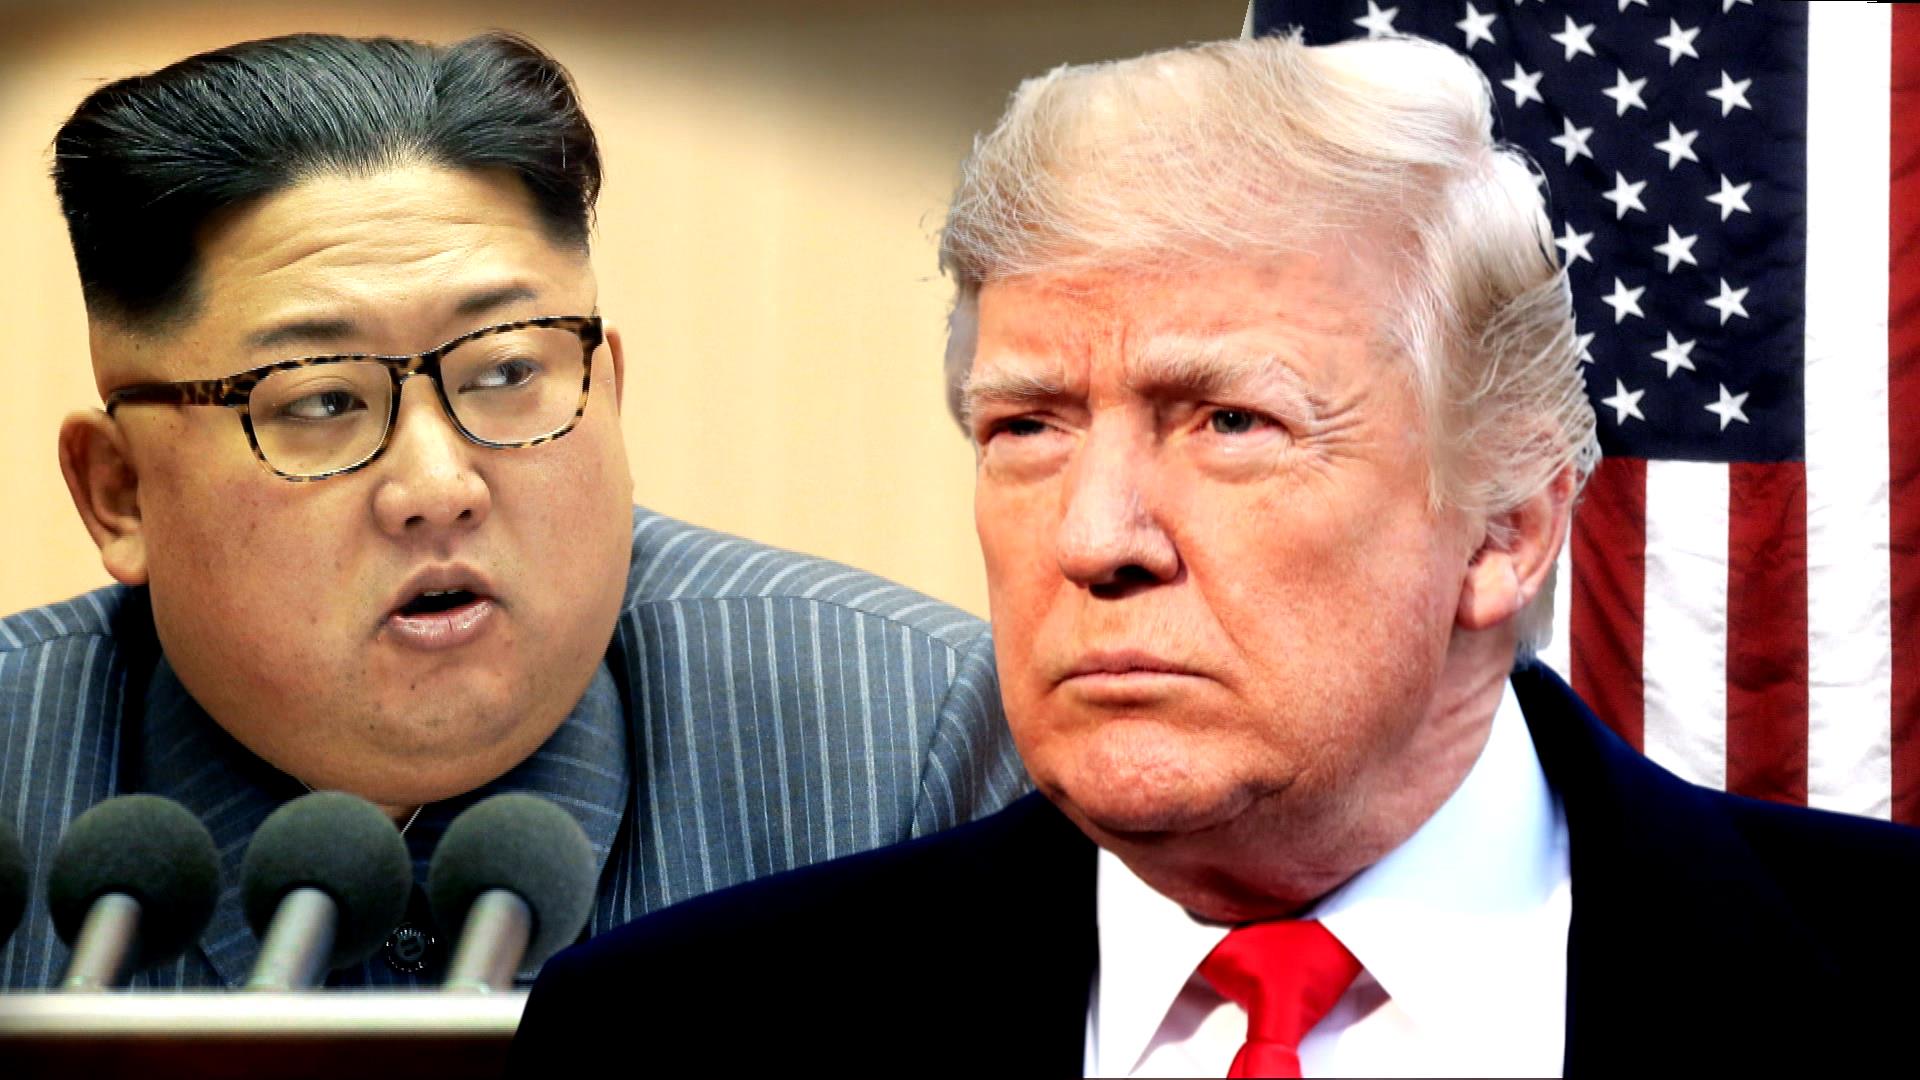 TODAY's headlines: Trump casts doubt on summit with Kim Jong Un